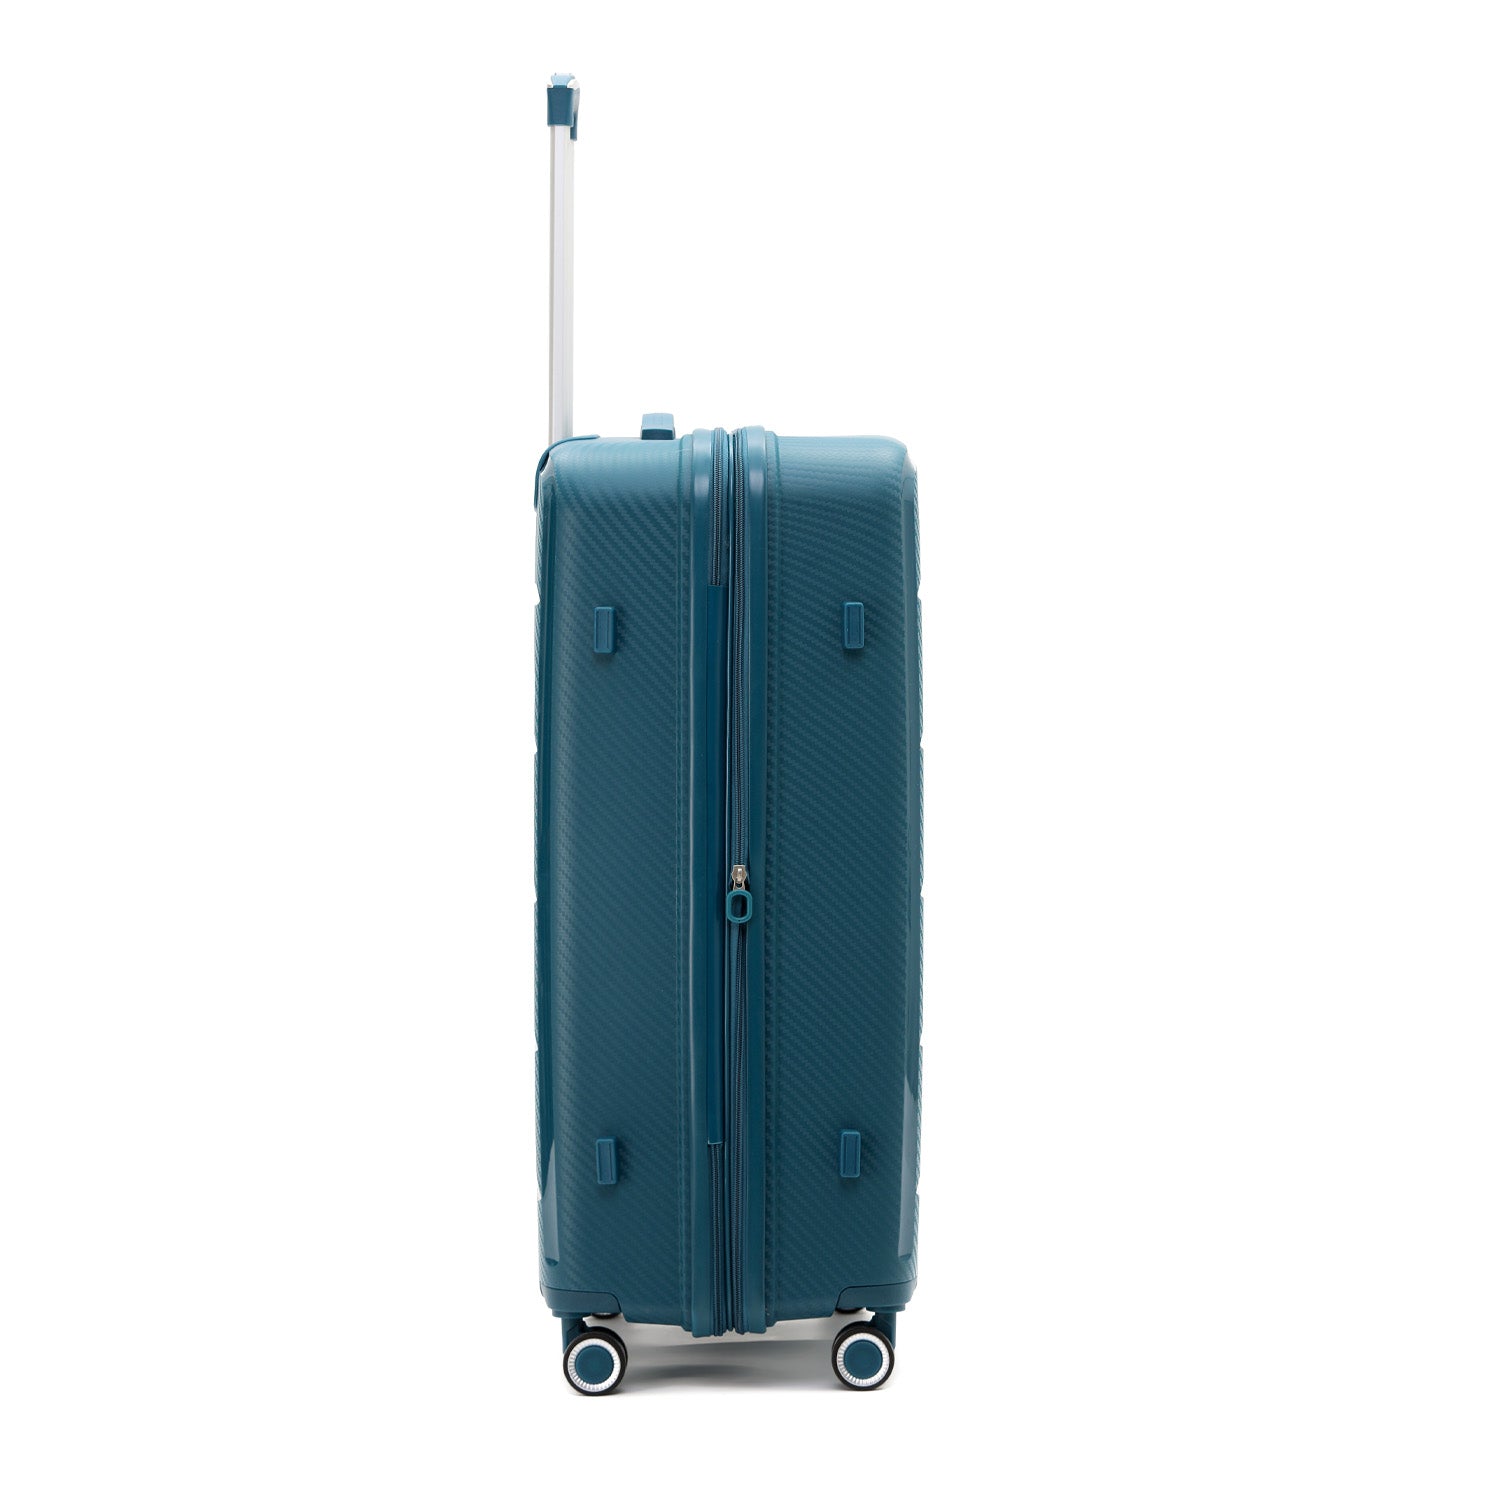 Paklite - PA7350 Large 75cm spinner suitcase - Blue-4